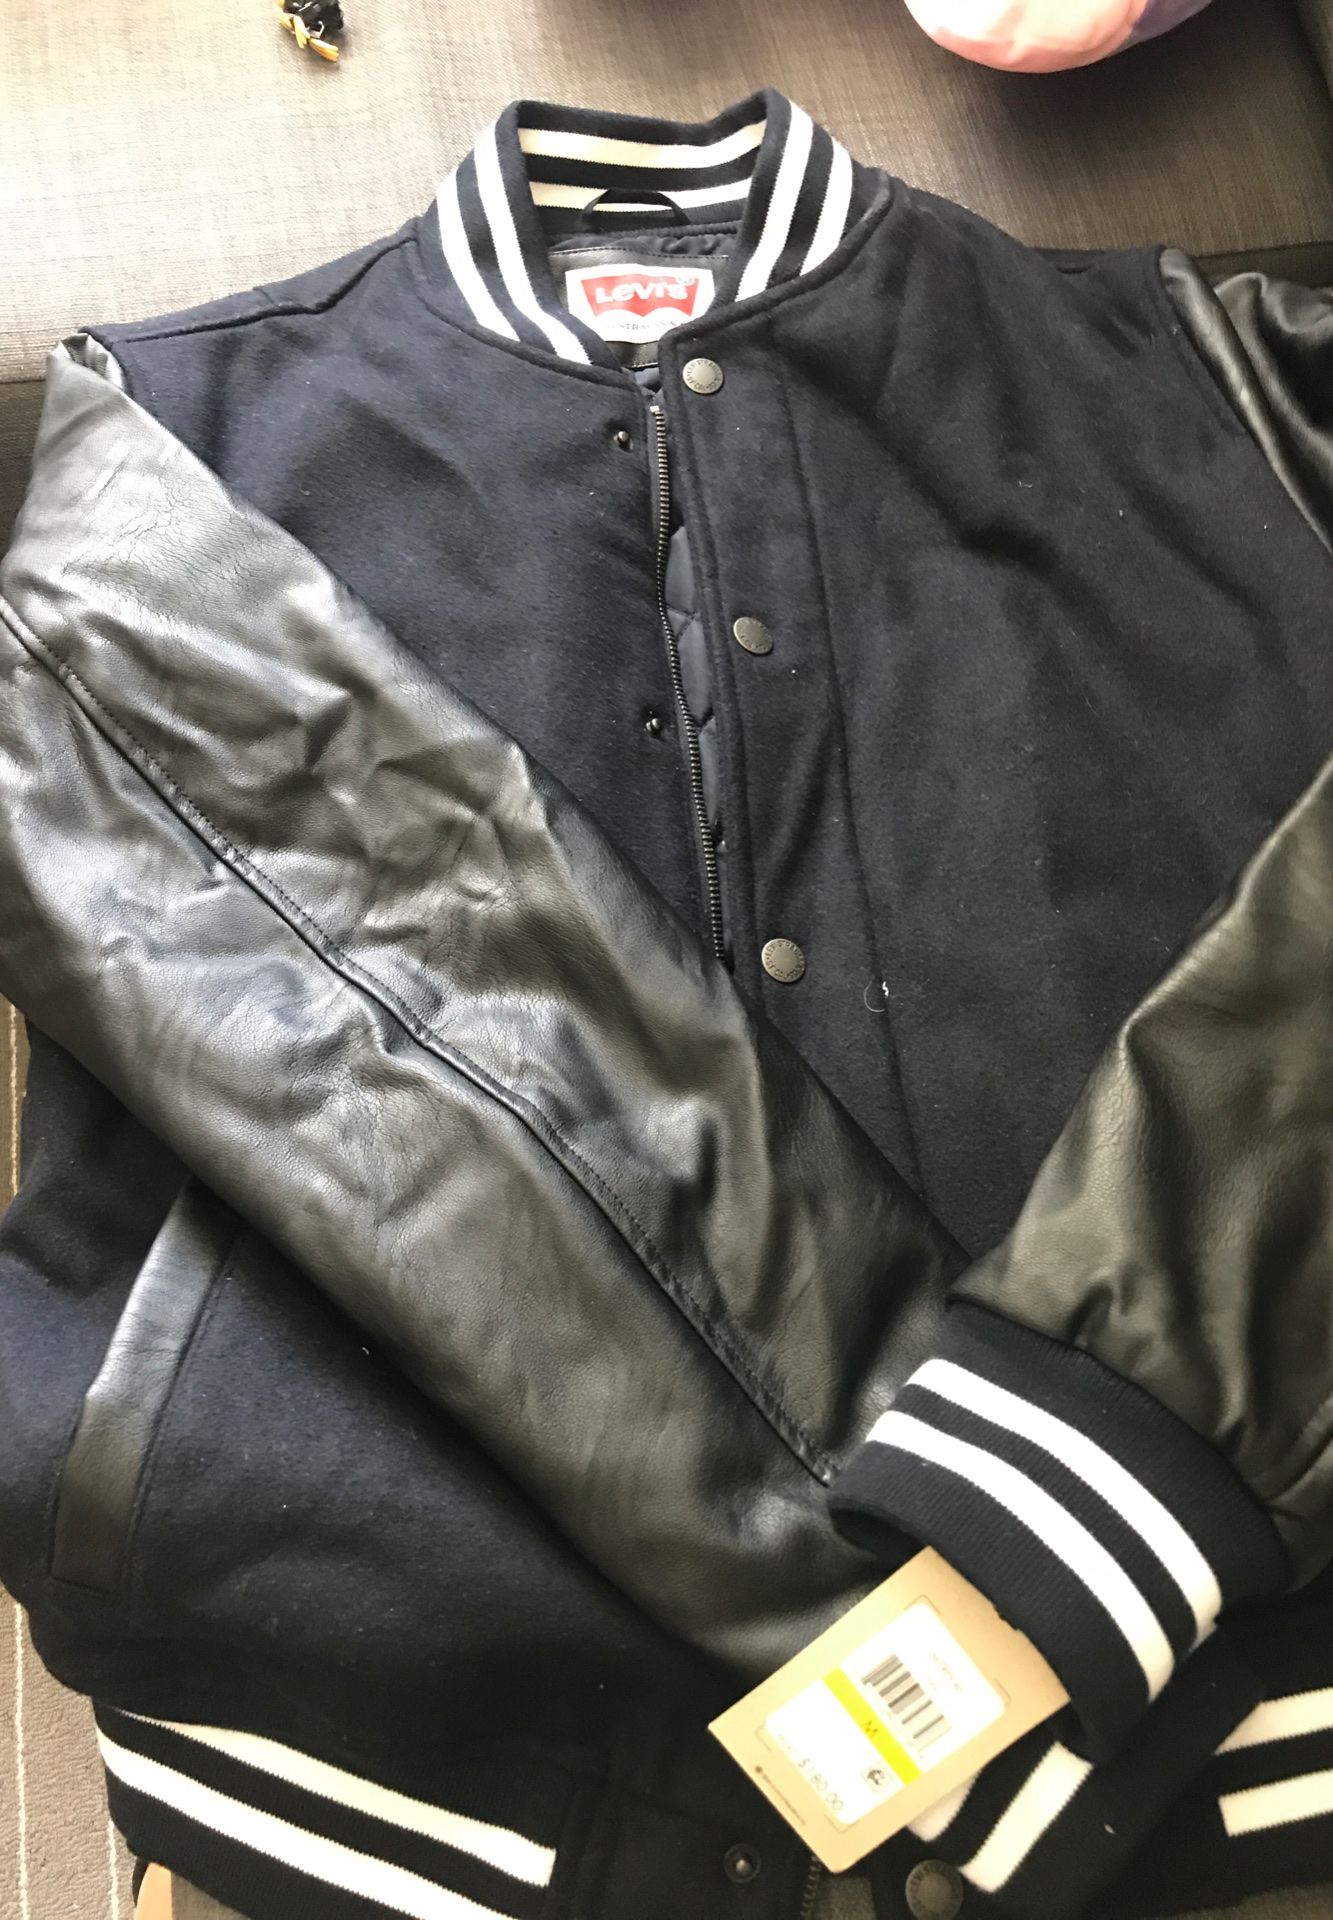 Brand new Levi’s Jacket